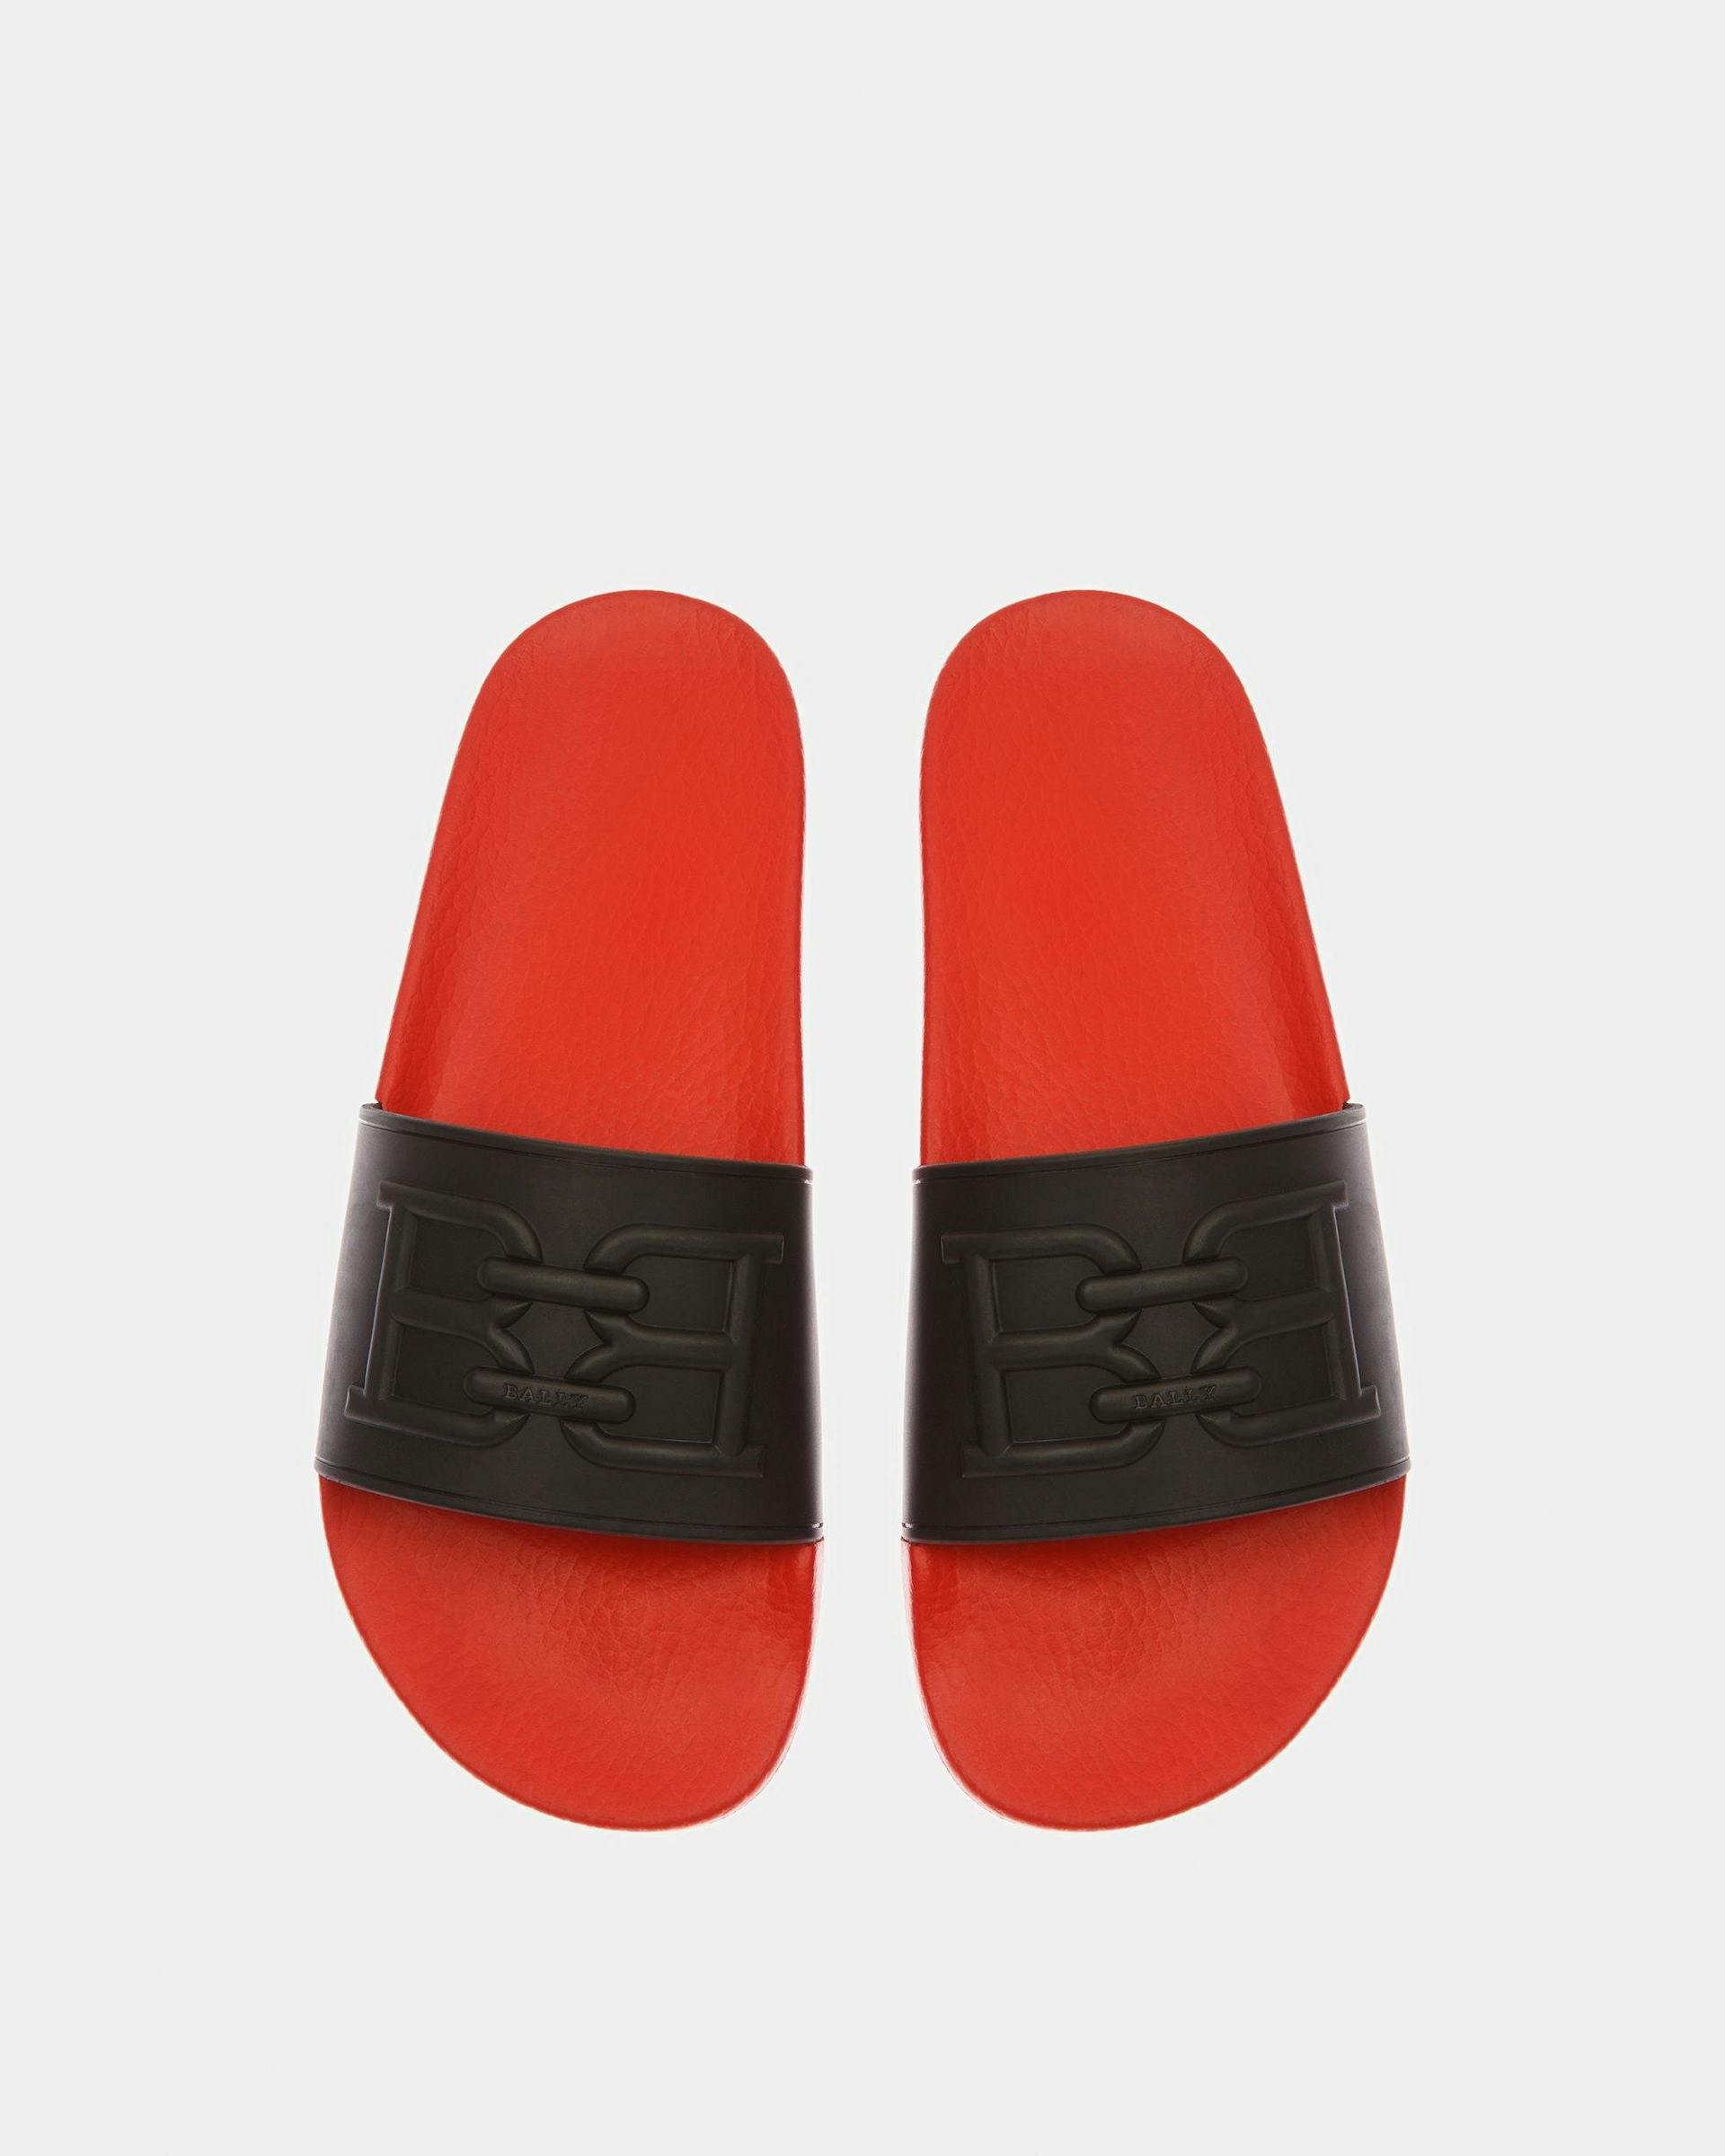 Scotty Rubber Sandals In Black And Orange - Men's - Bally - 02